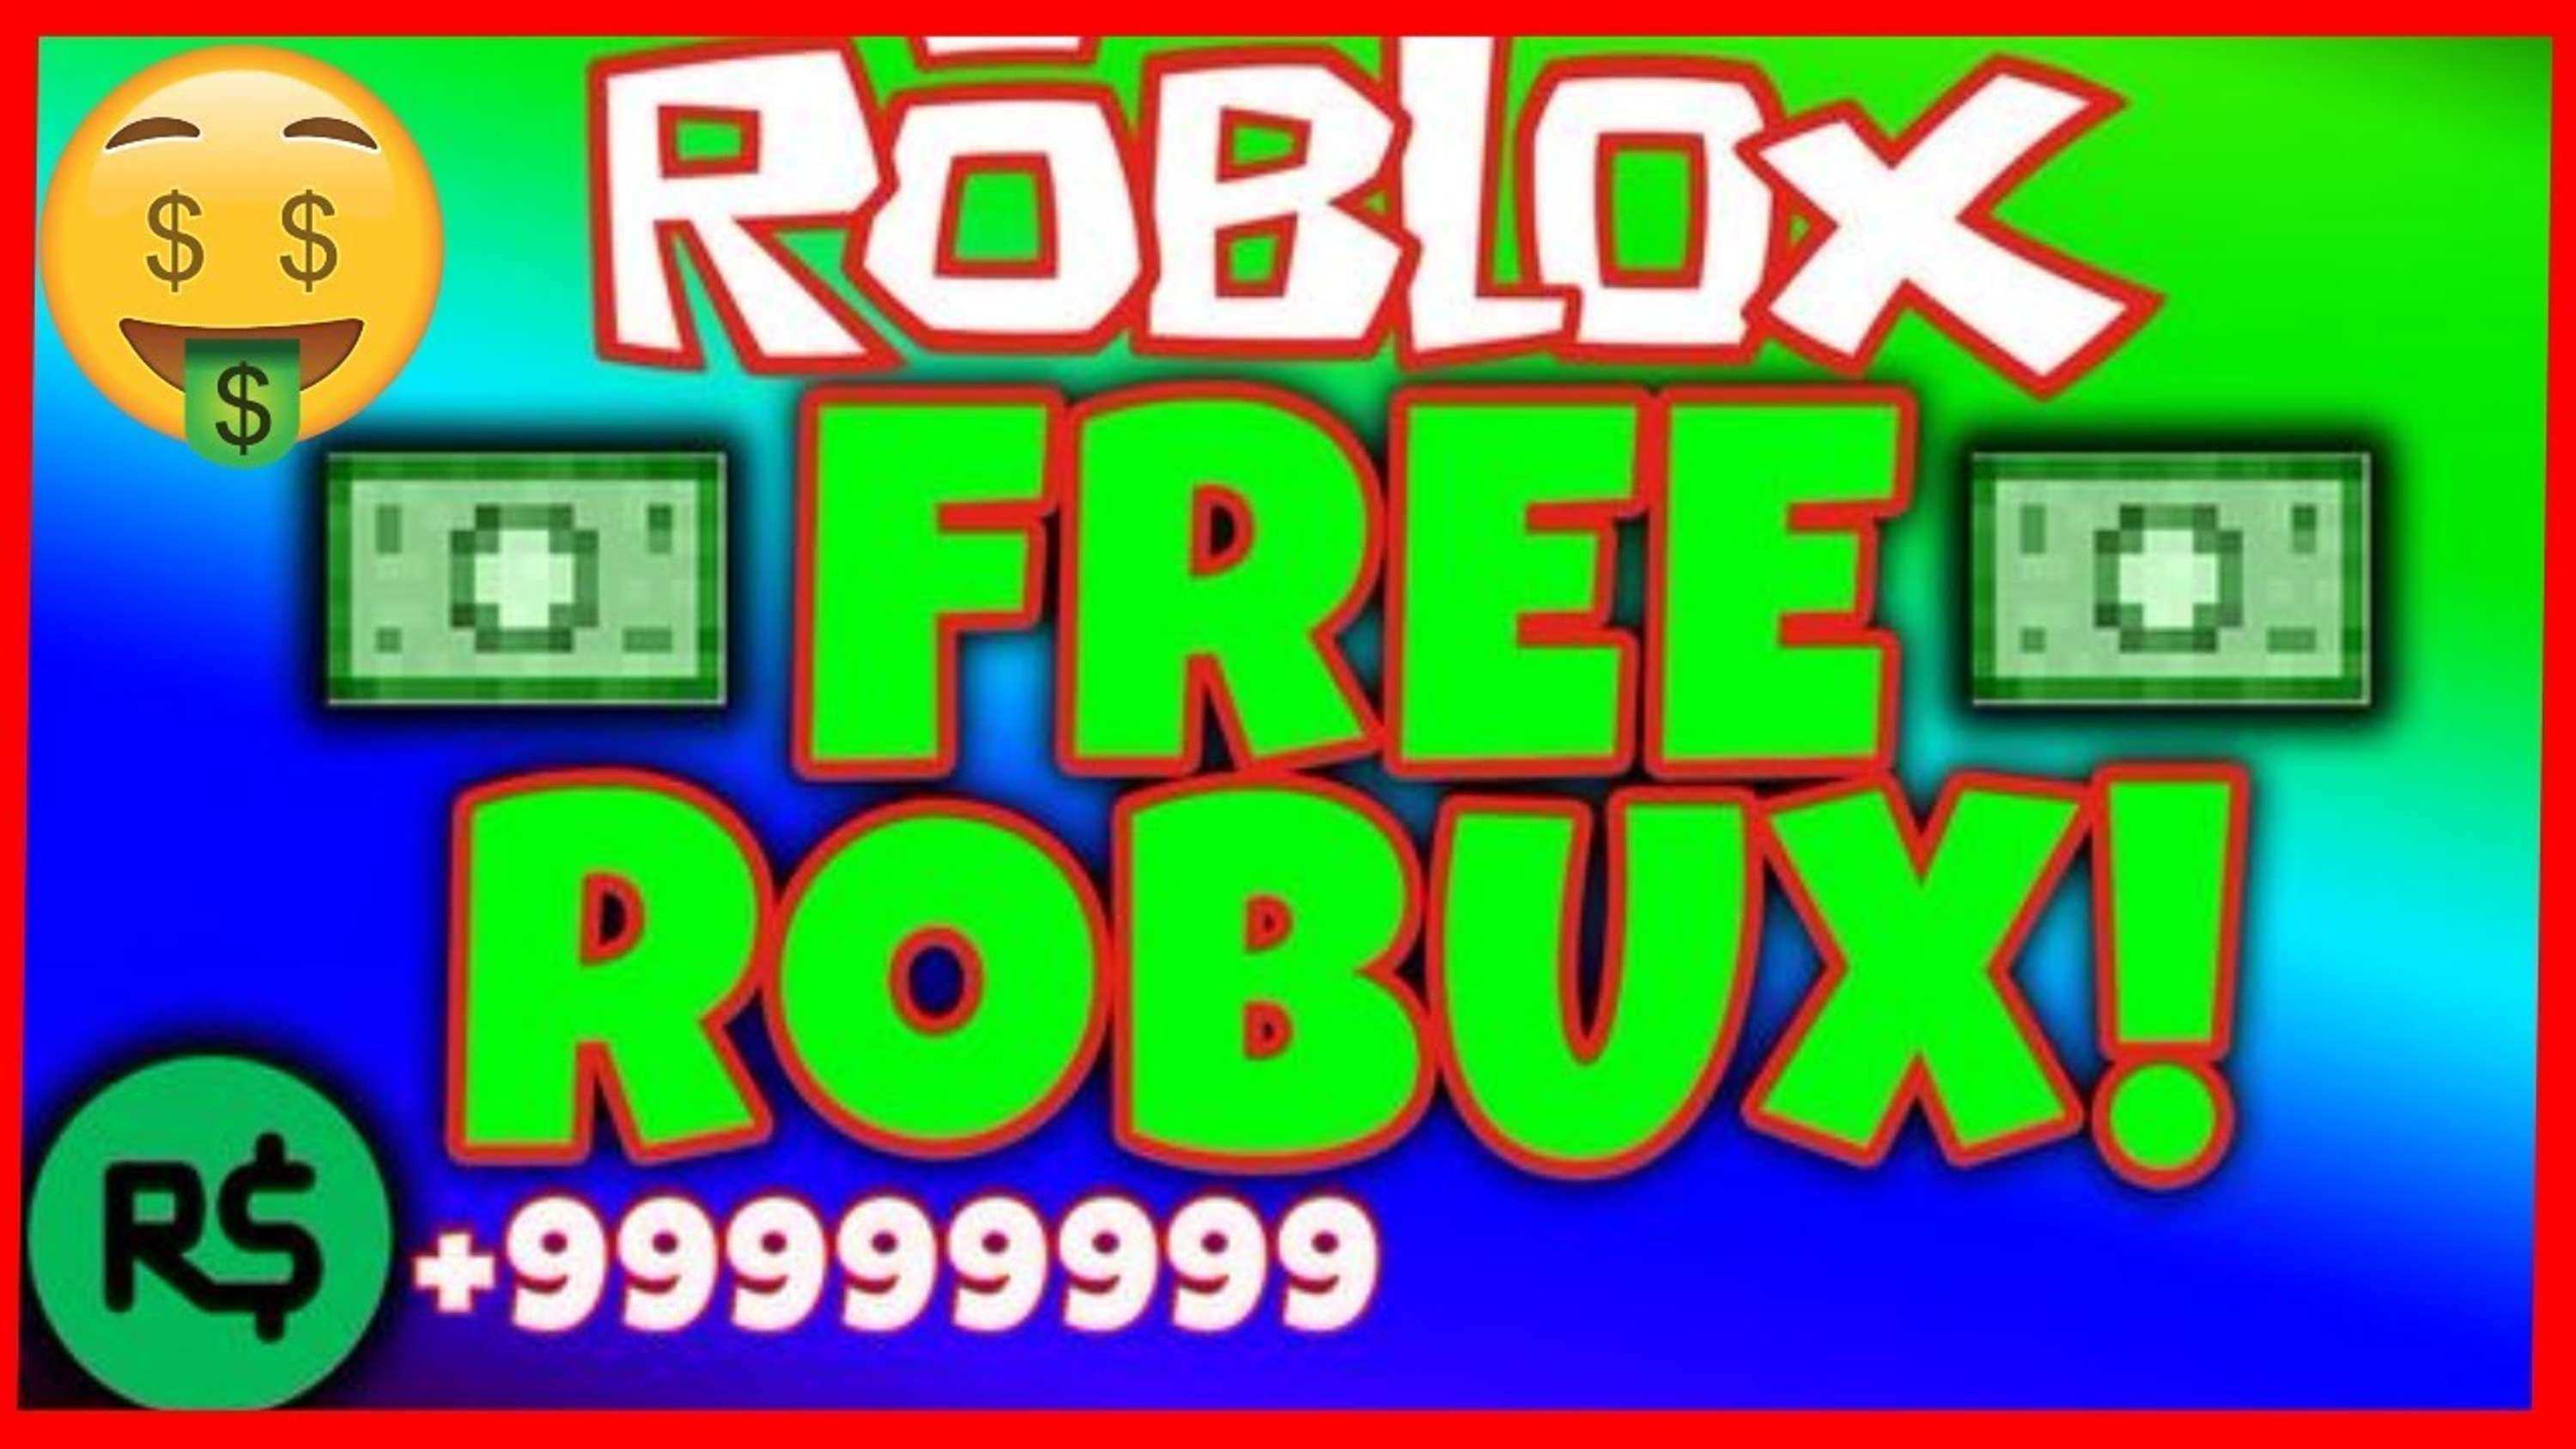 GLITCH] Roblox Hack App - Generate Infinite Robux Cheat | The Dots - 